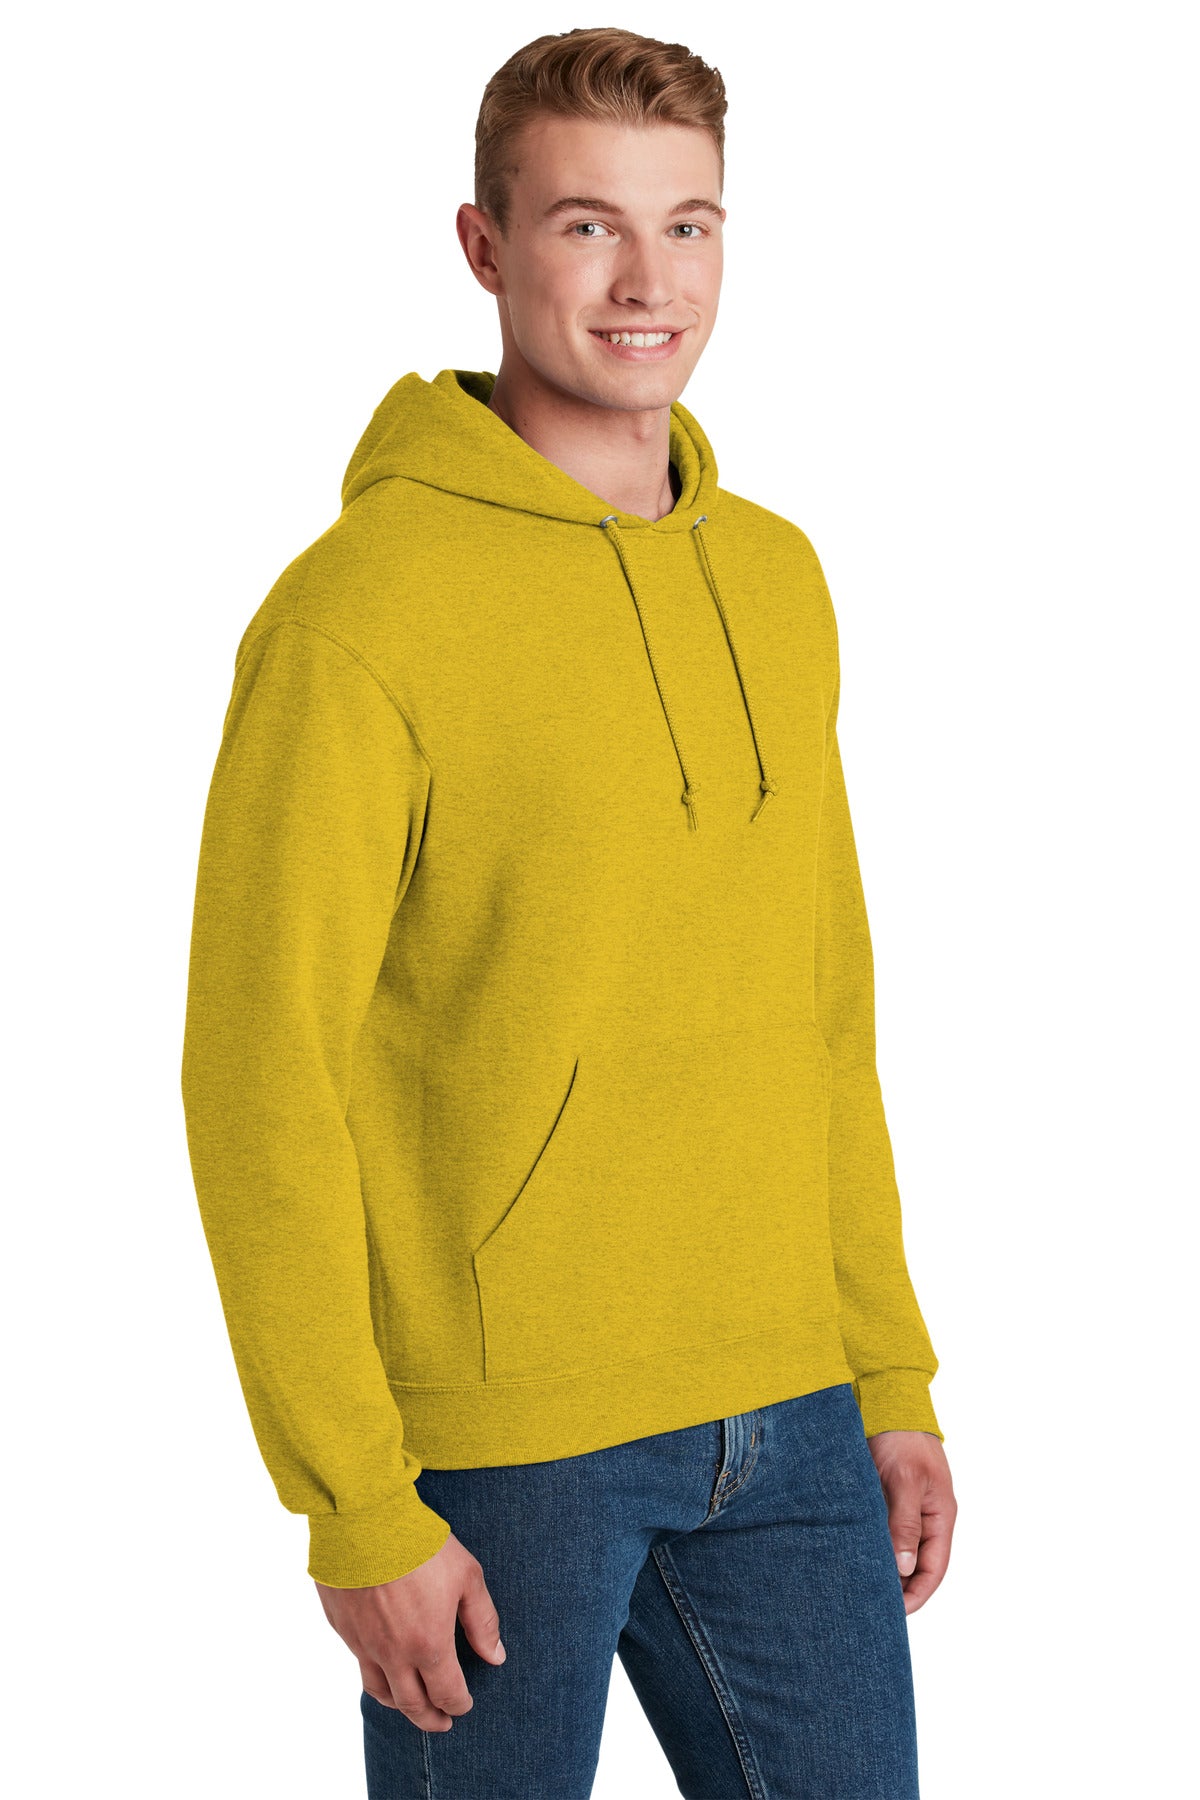 Jerzees - NuBlend Pullover Hooded Sweatshirt. 996M - Mustard Heather